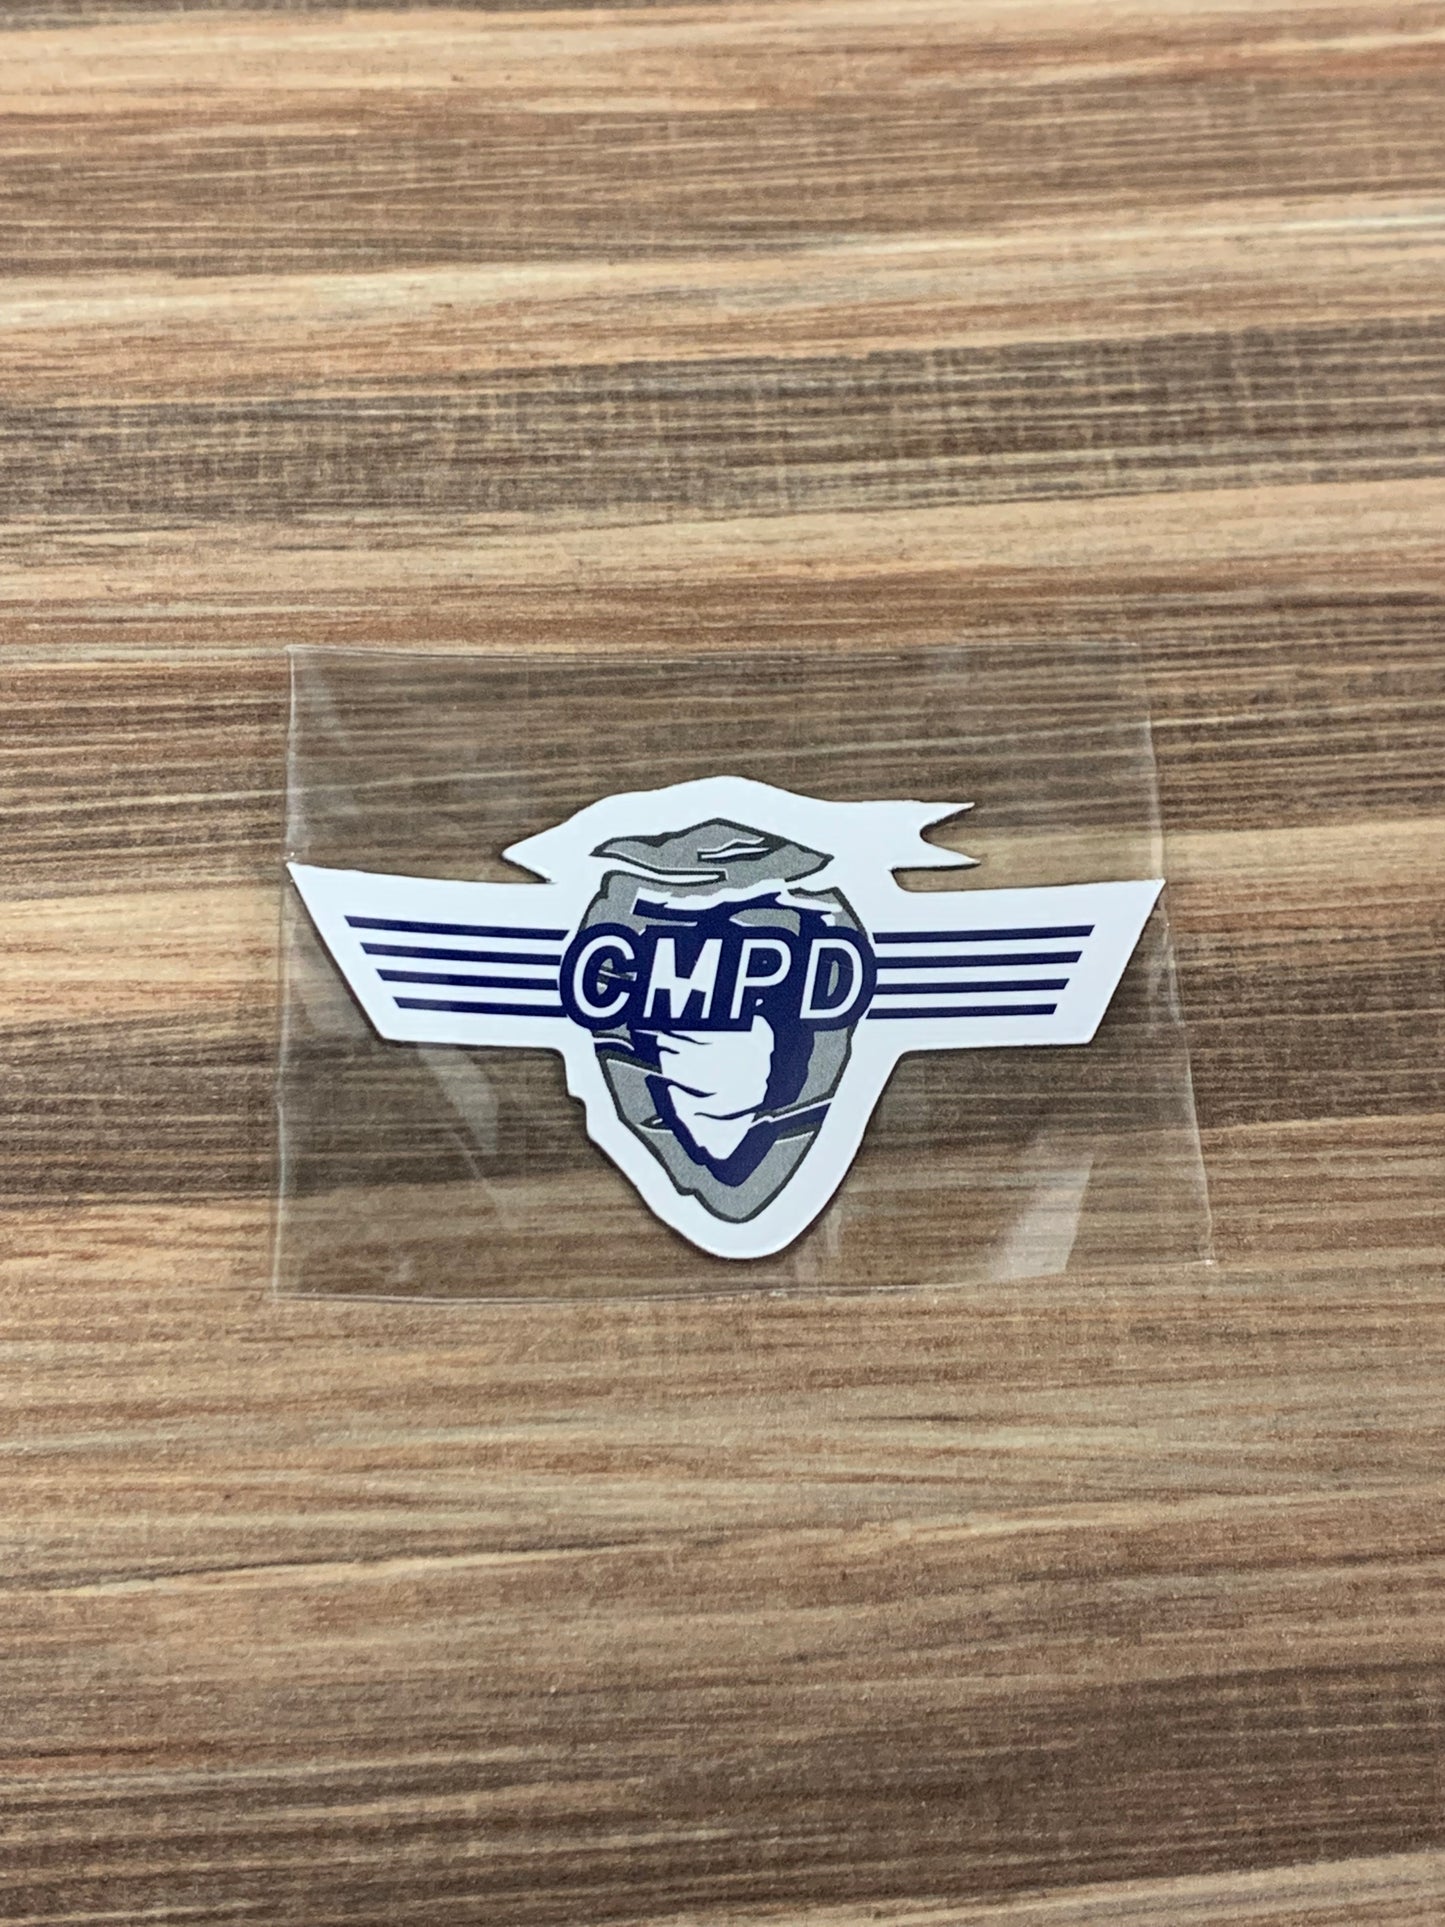 Magnet - CMPD logo